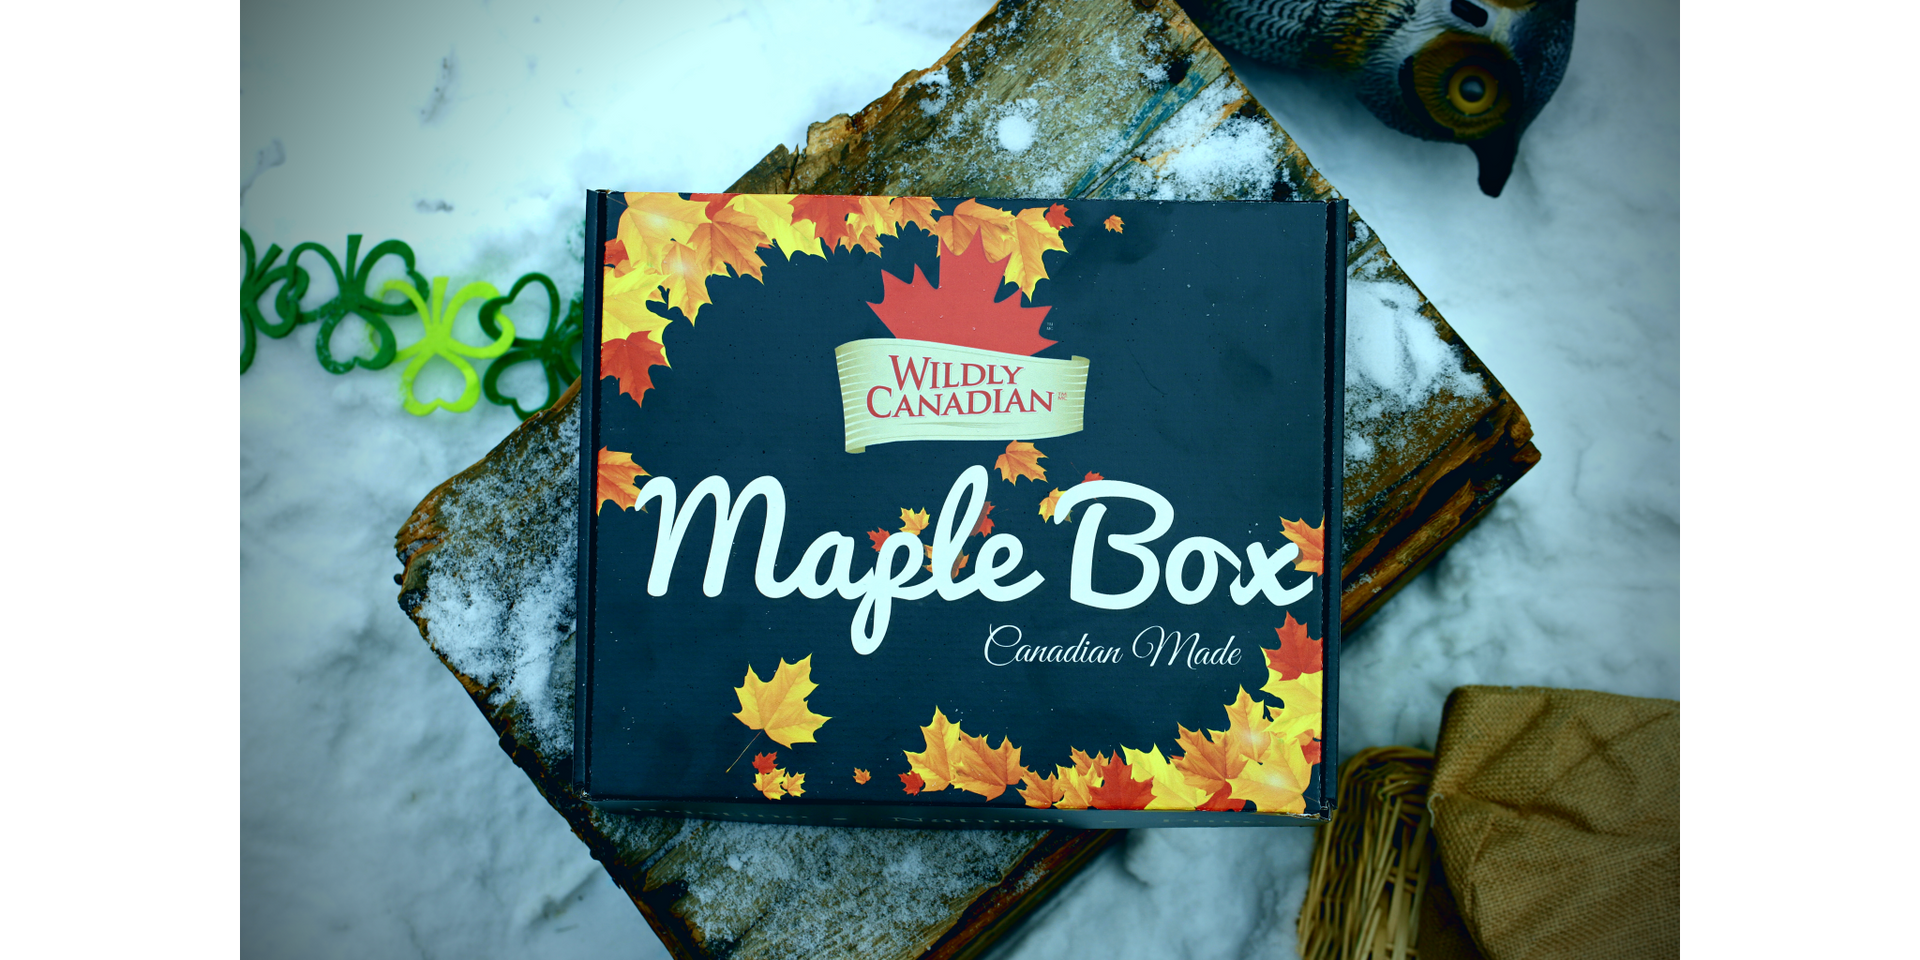 The Maple Box